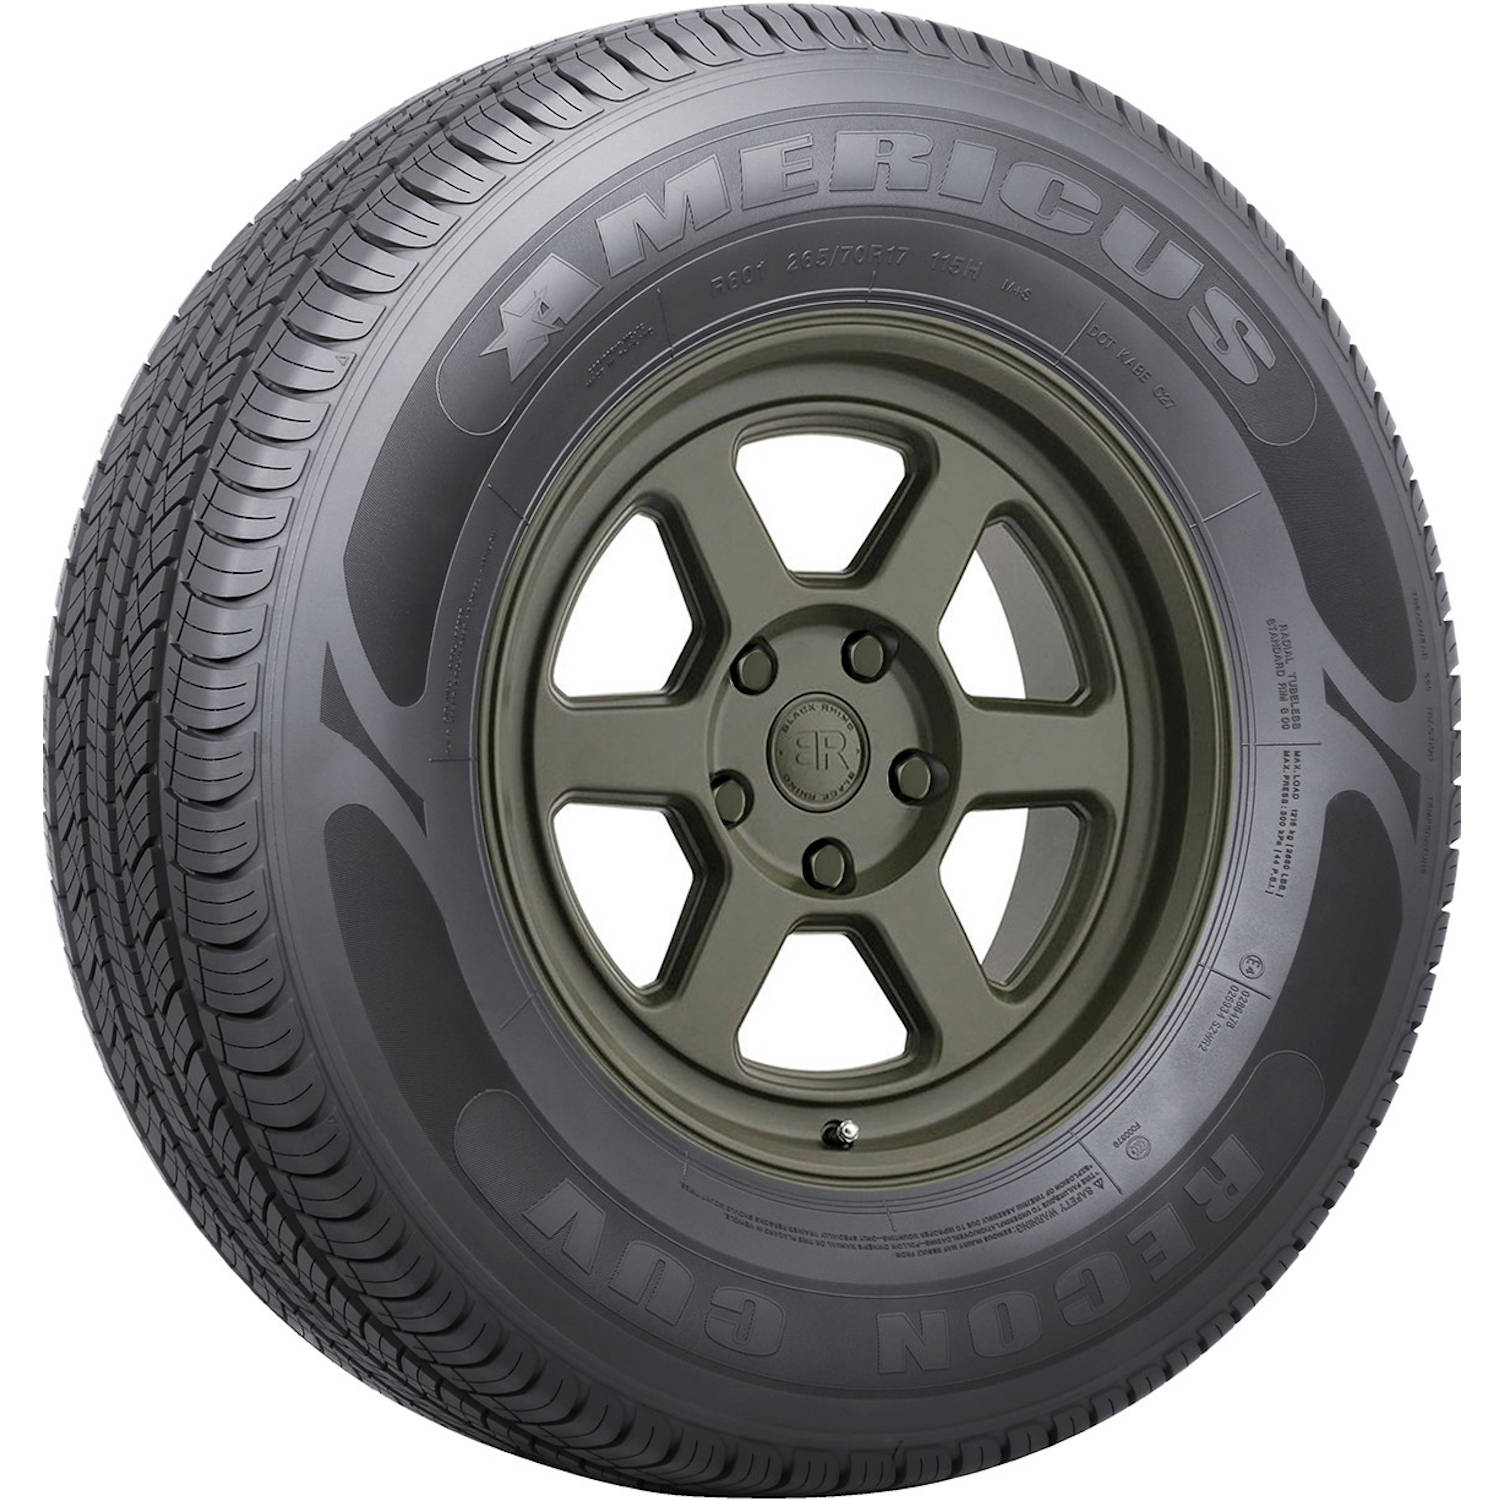 AMERICUS RECON CUV 265/60R18 (30.5X10.4R 18) Tires